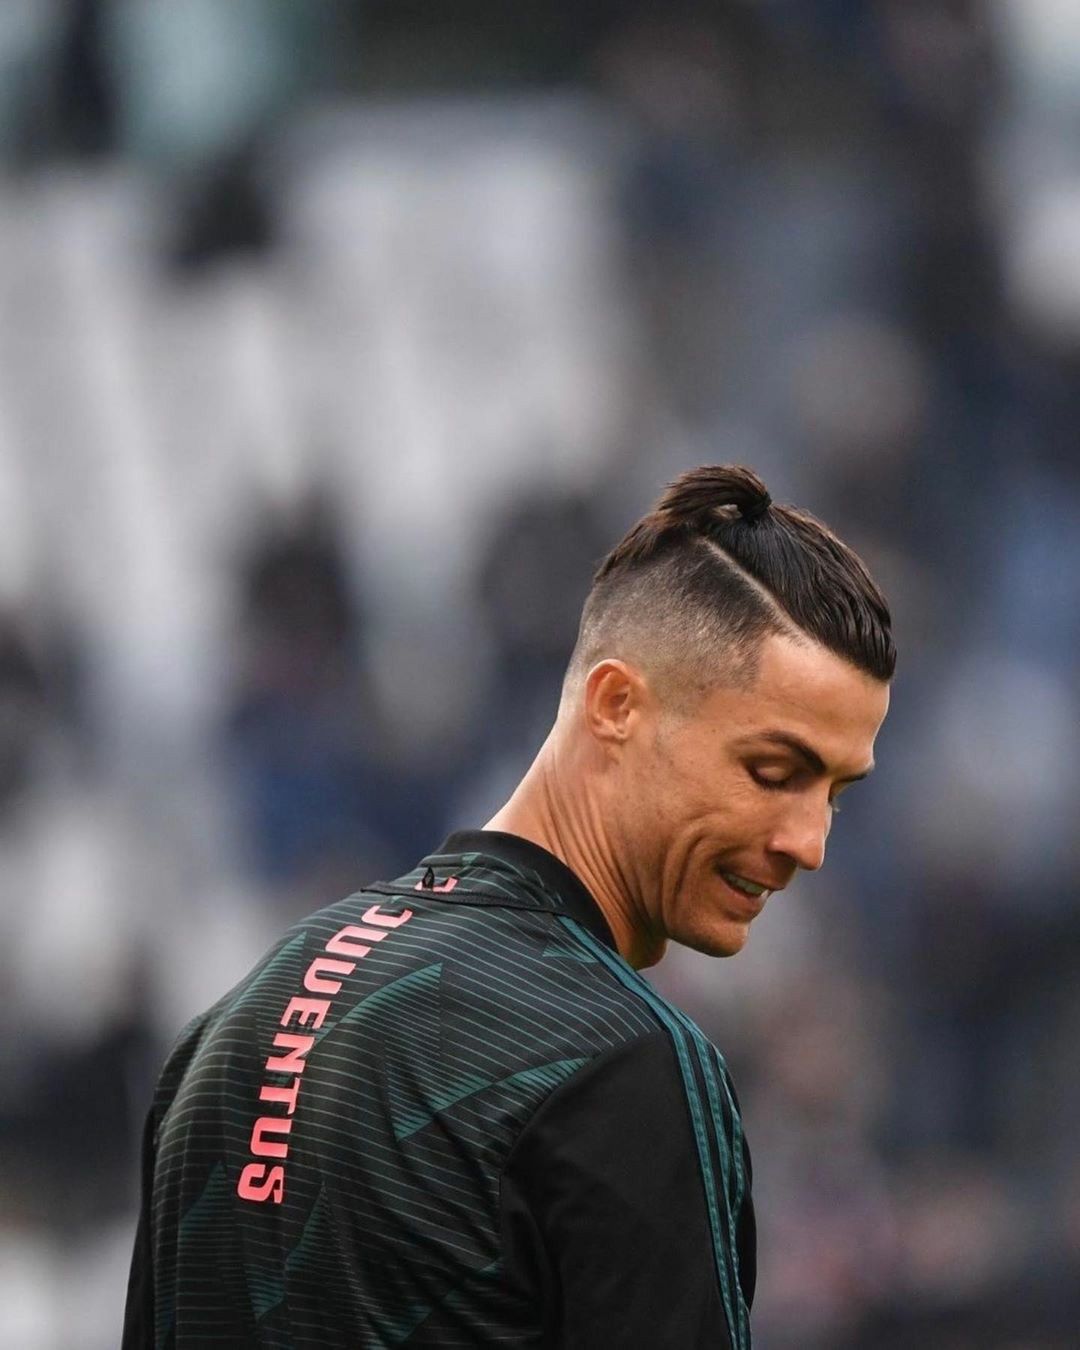 Cristiano Ronaldo haircut and hairstyle